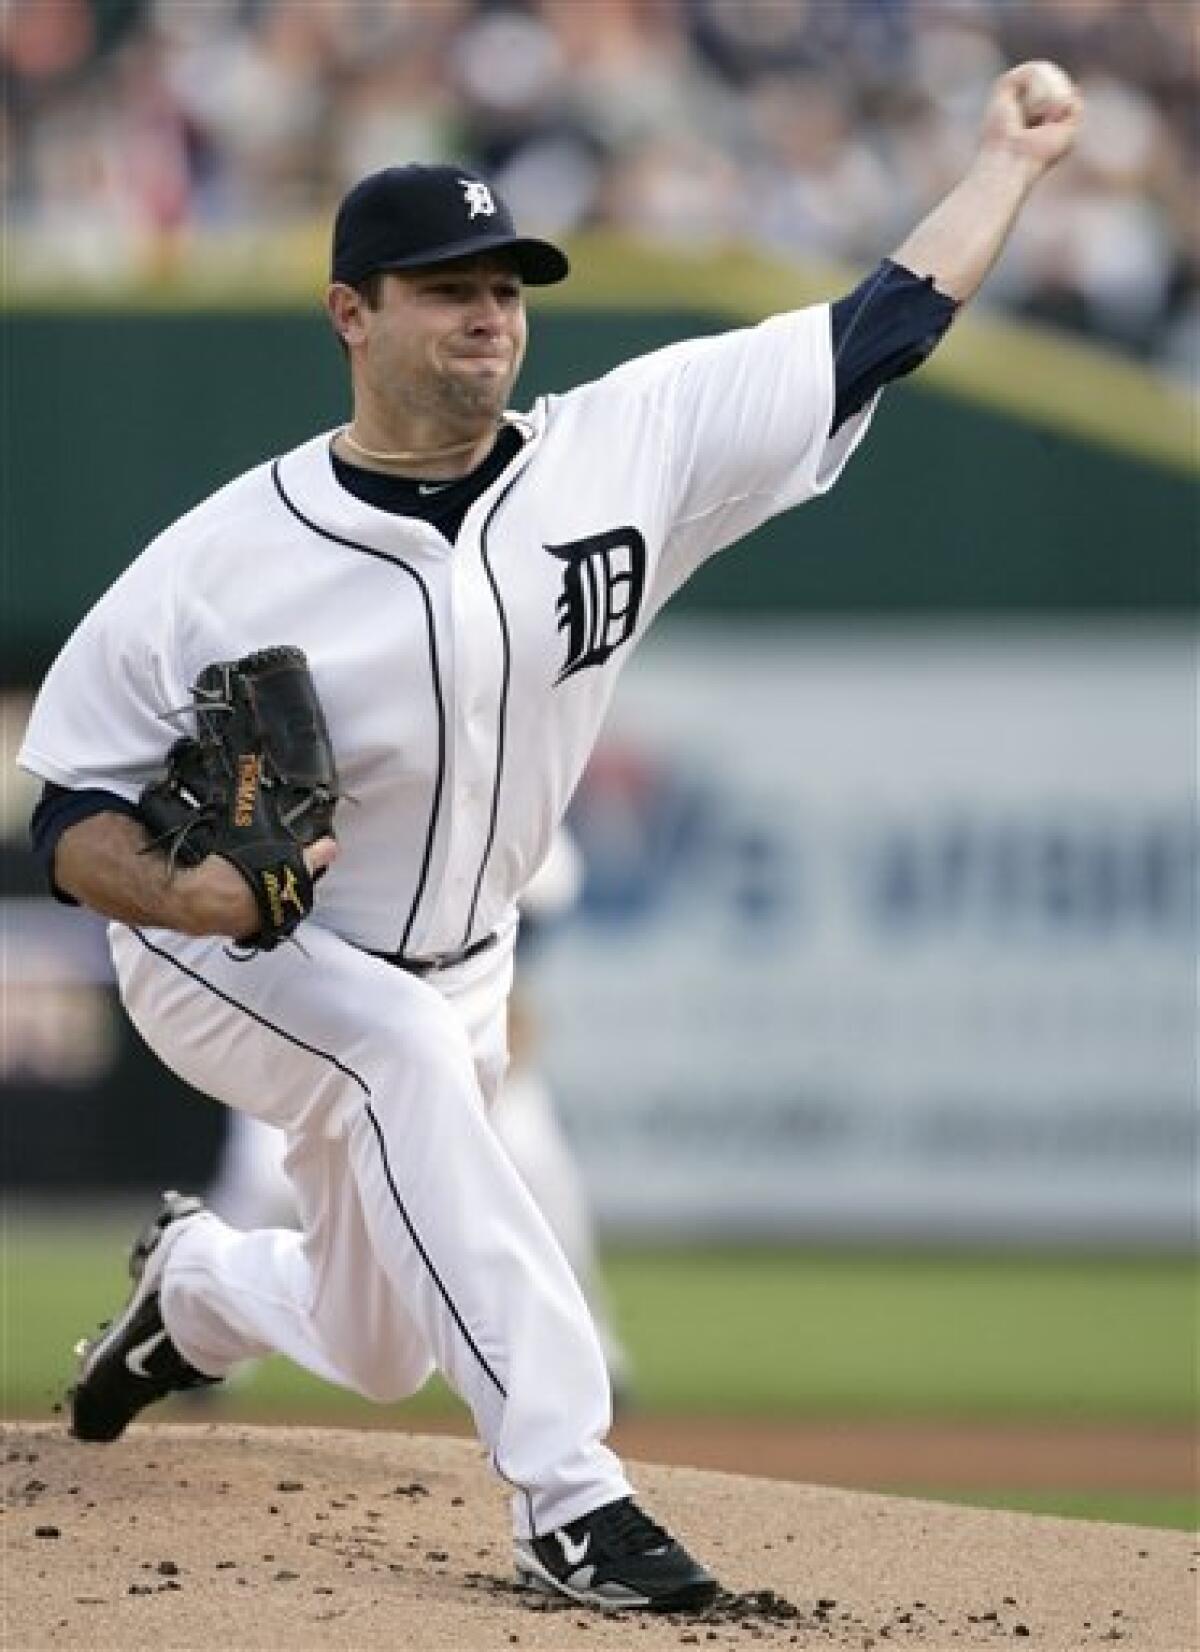 Politi: Against Detroit Tigers, Yankees' Curtis Granderson has one